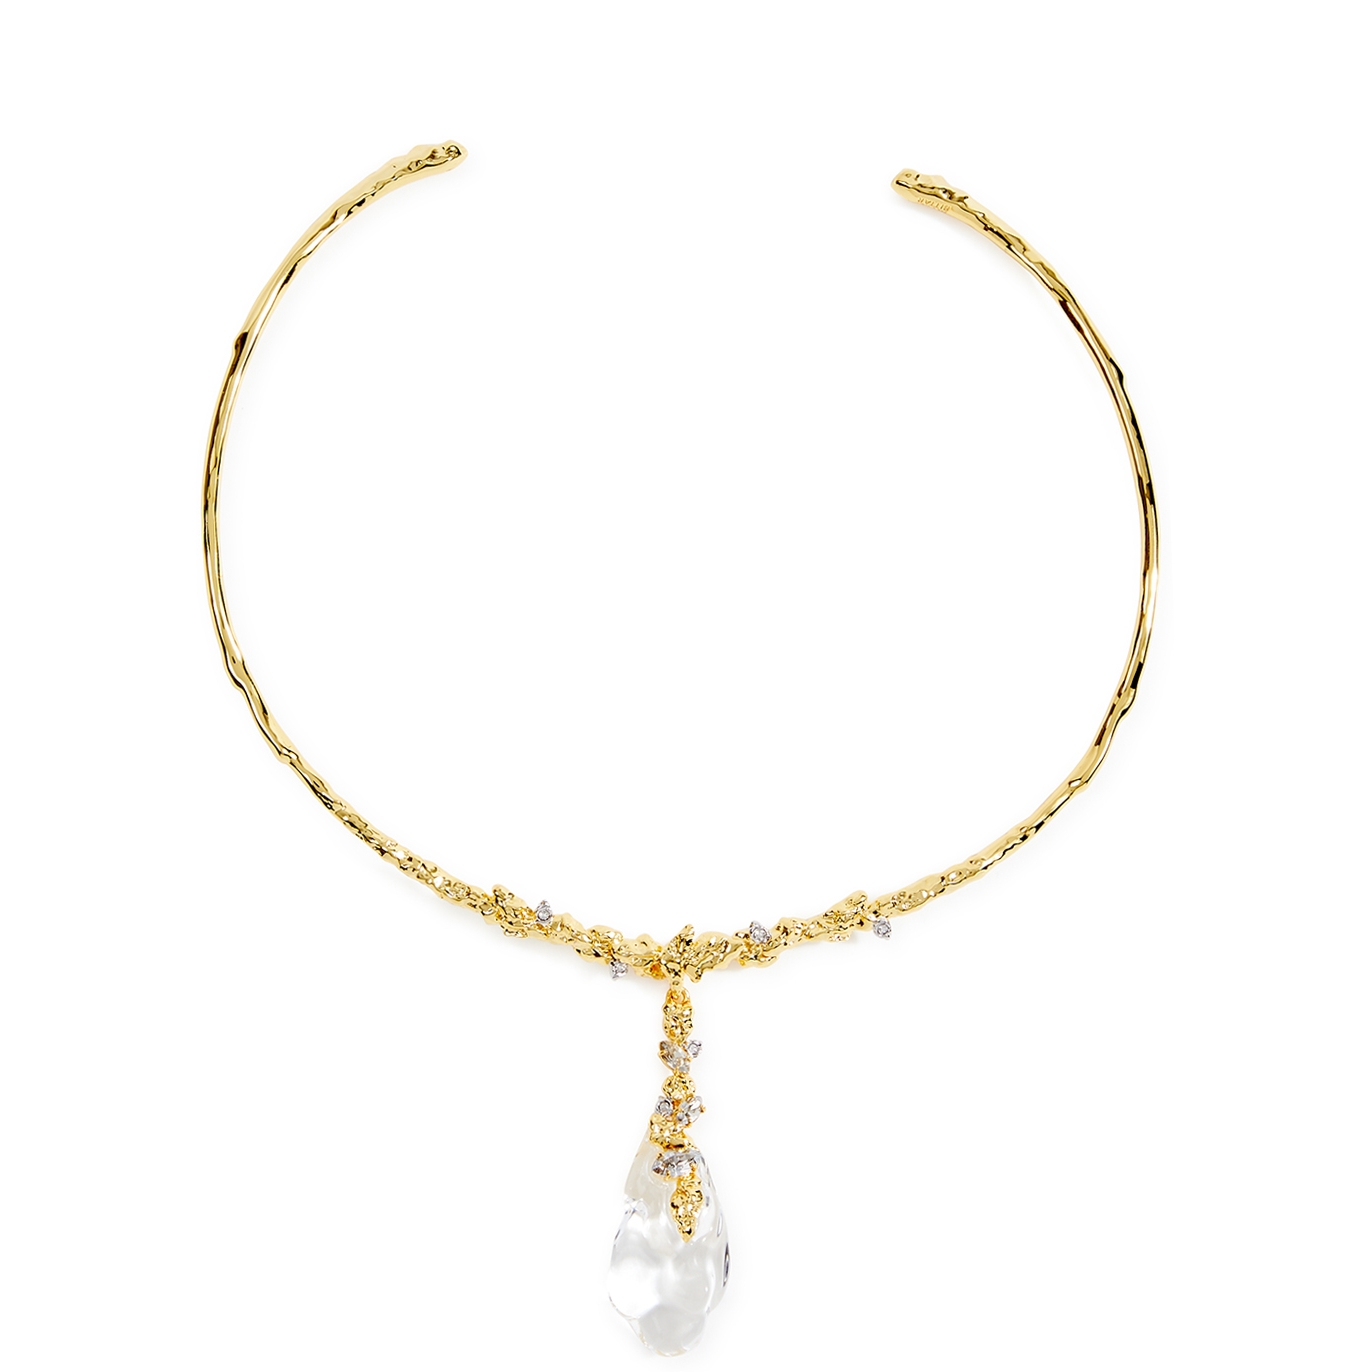 Alexis Bittar Dream Rain 14kt Gold-plated Necklace